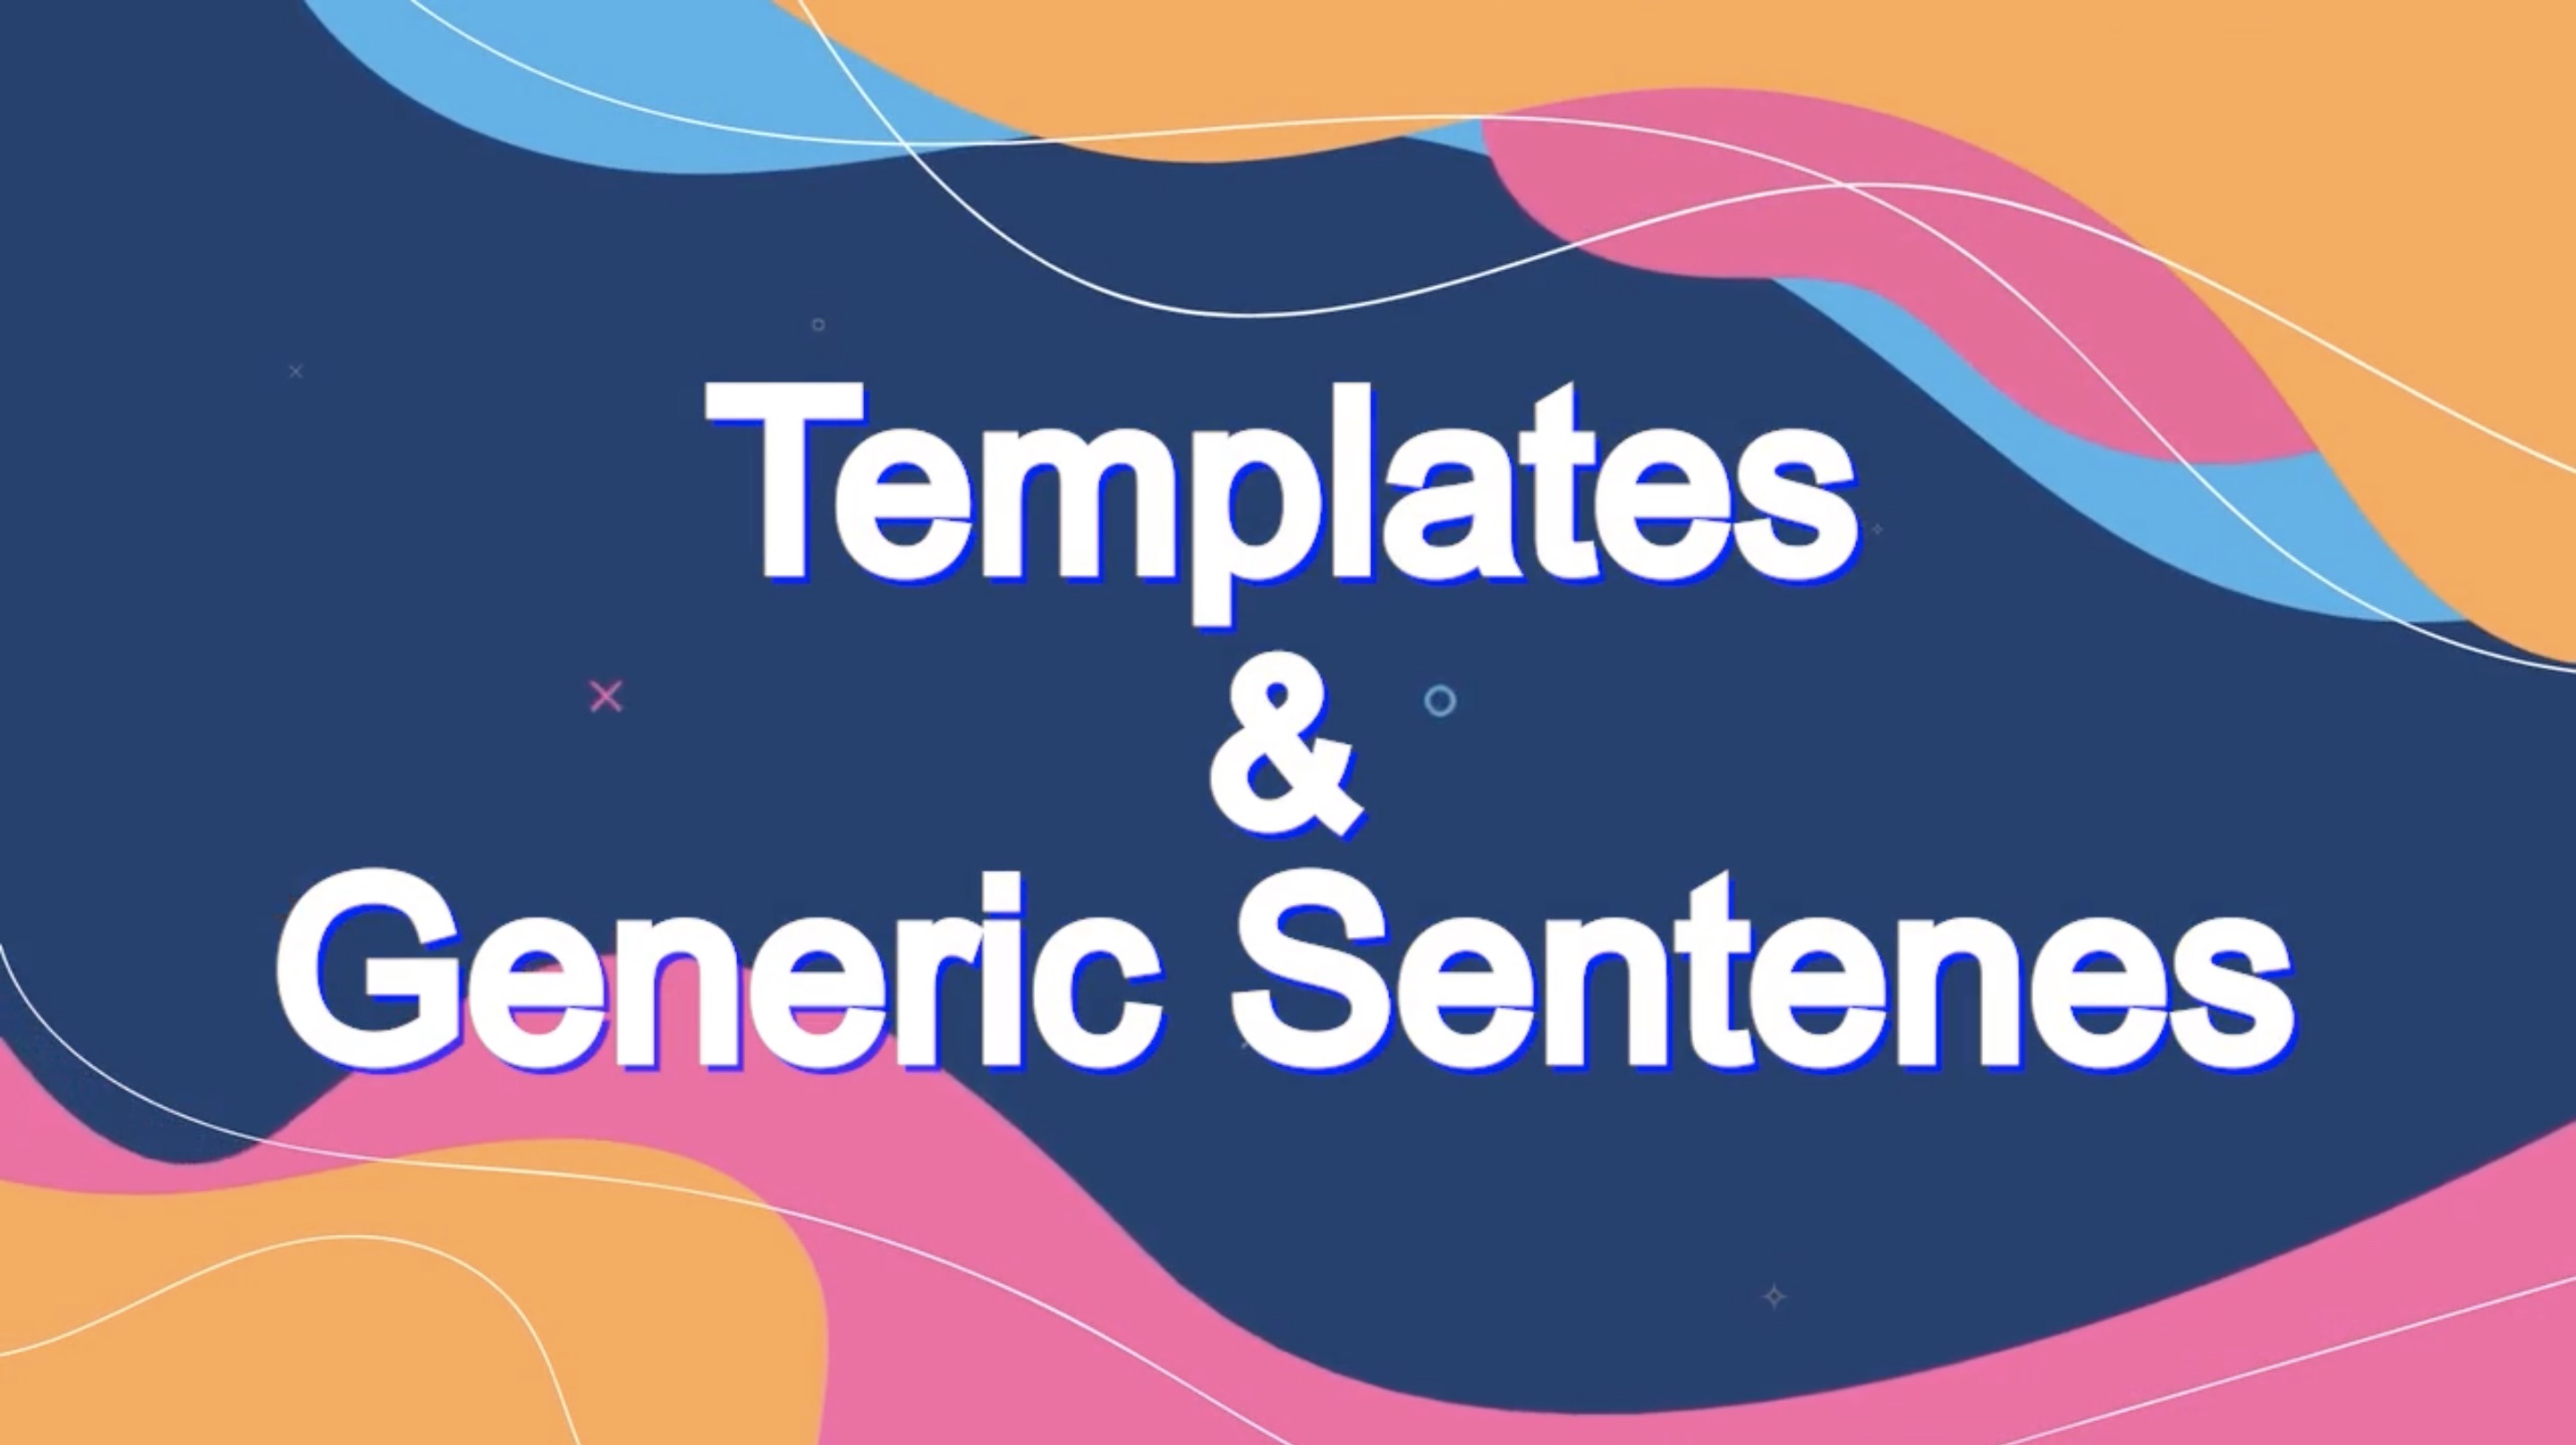 Writing Task one: Templates & Generic Sentences